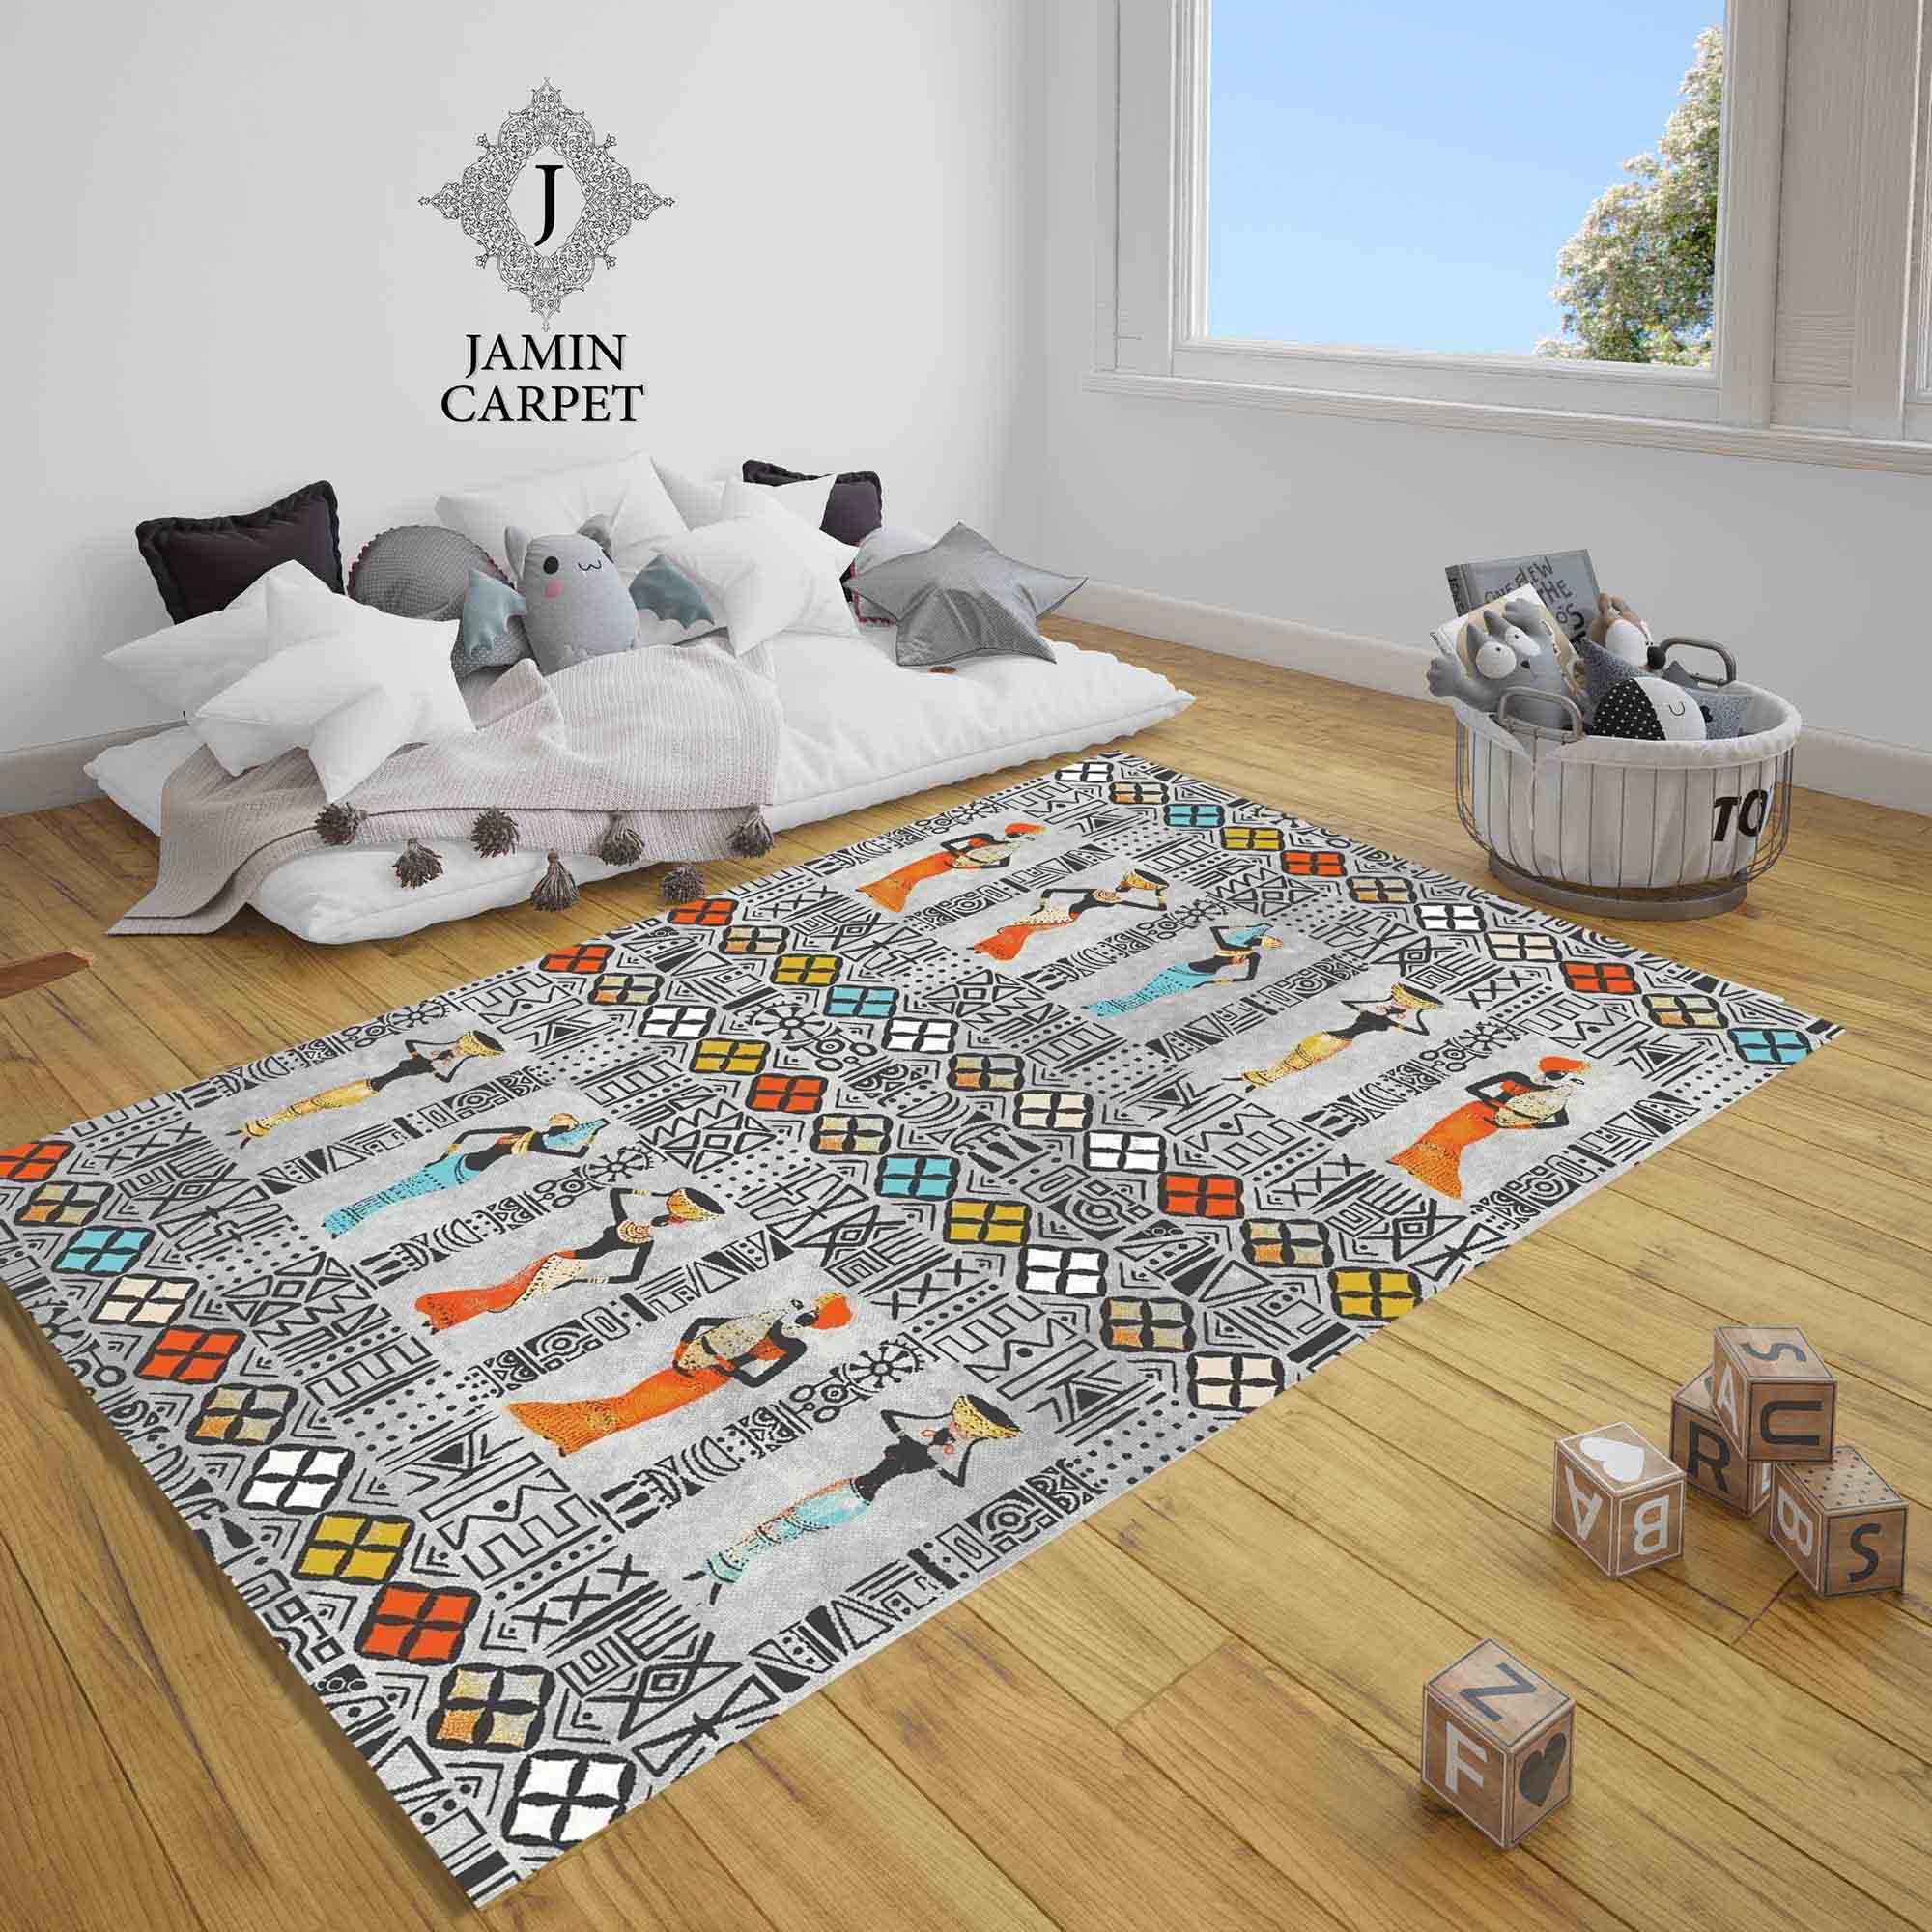 Fantasy carpet code 214 comb 400 density 1800 all acrylic